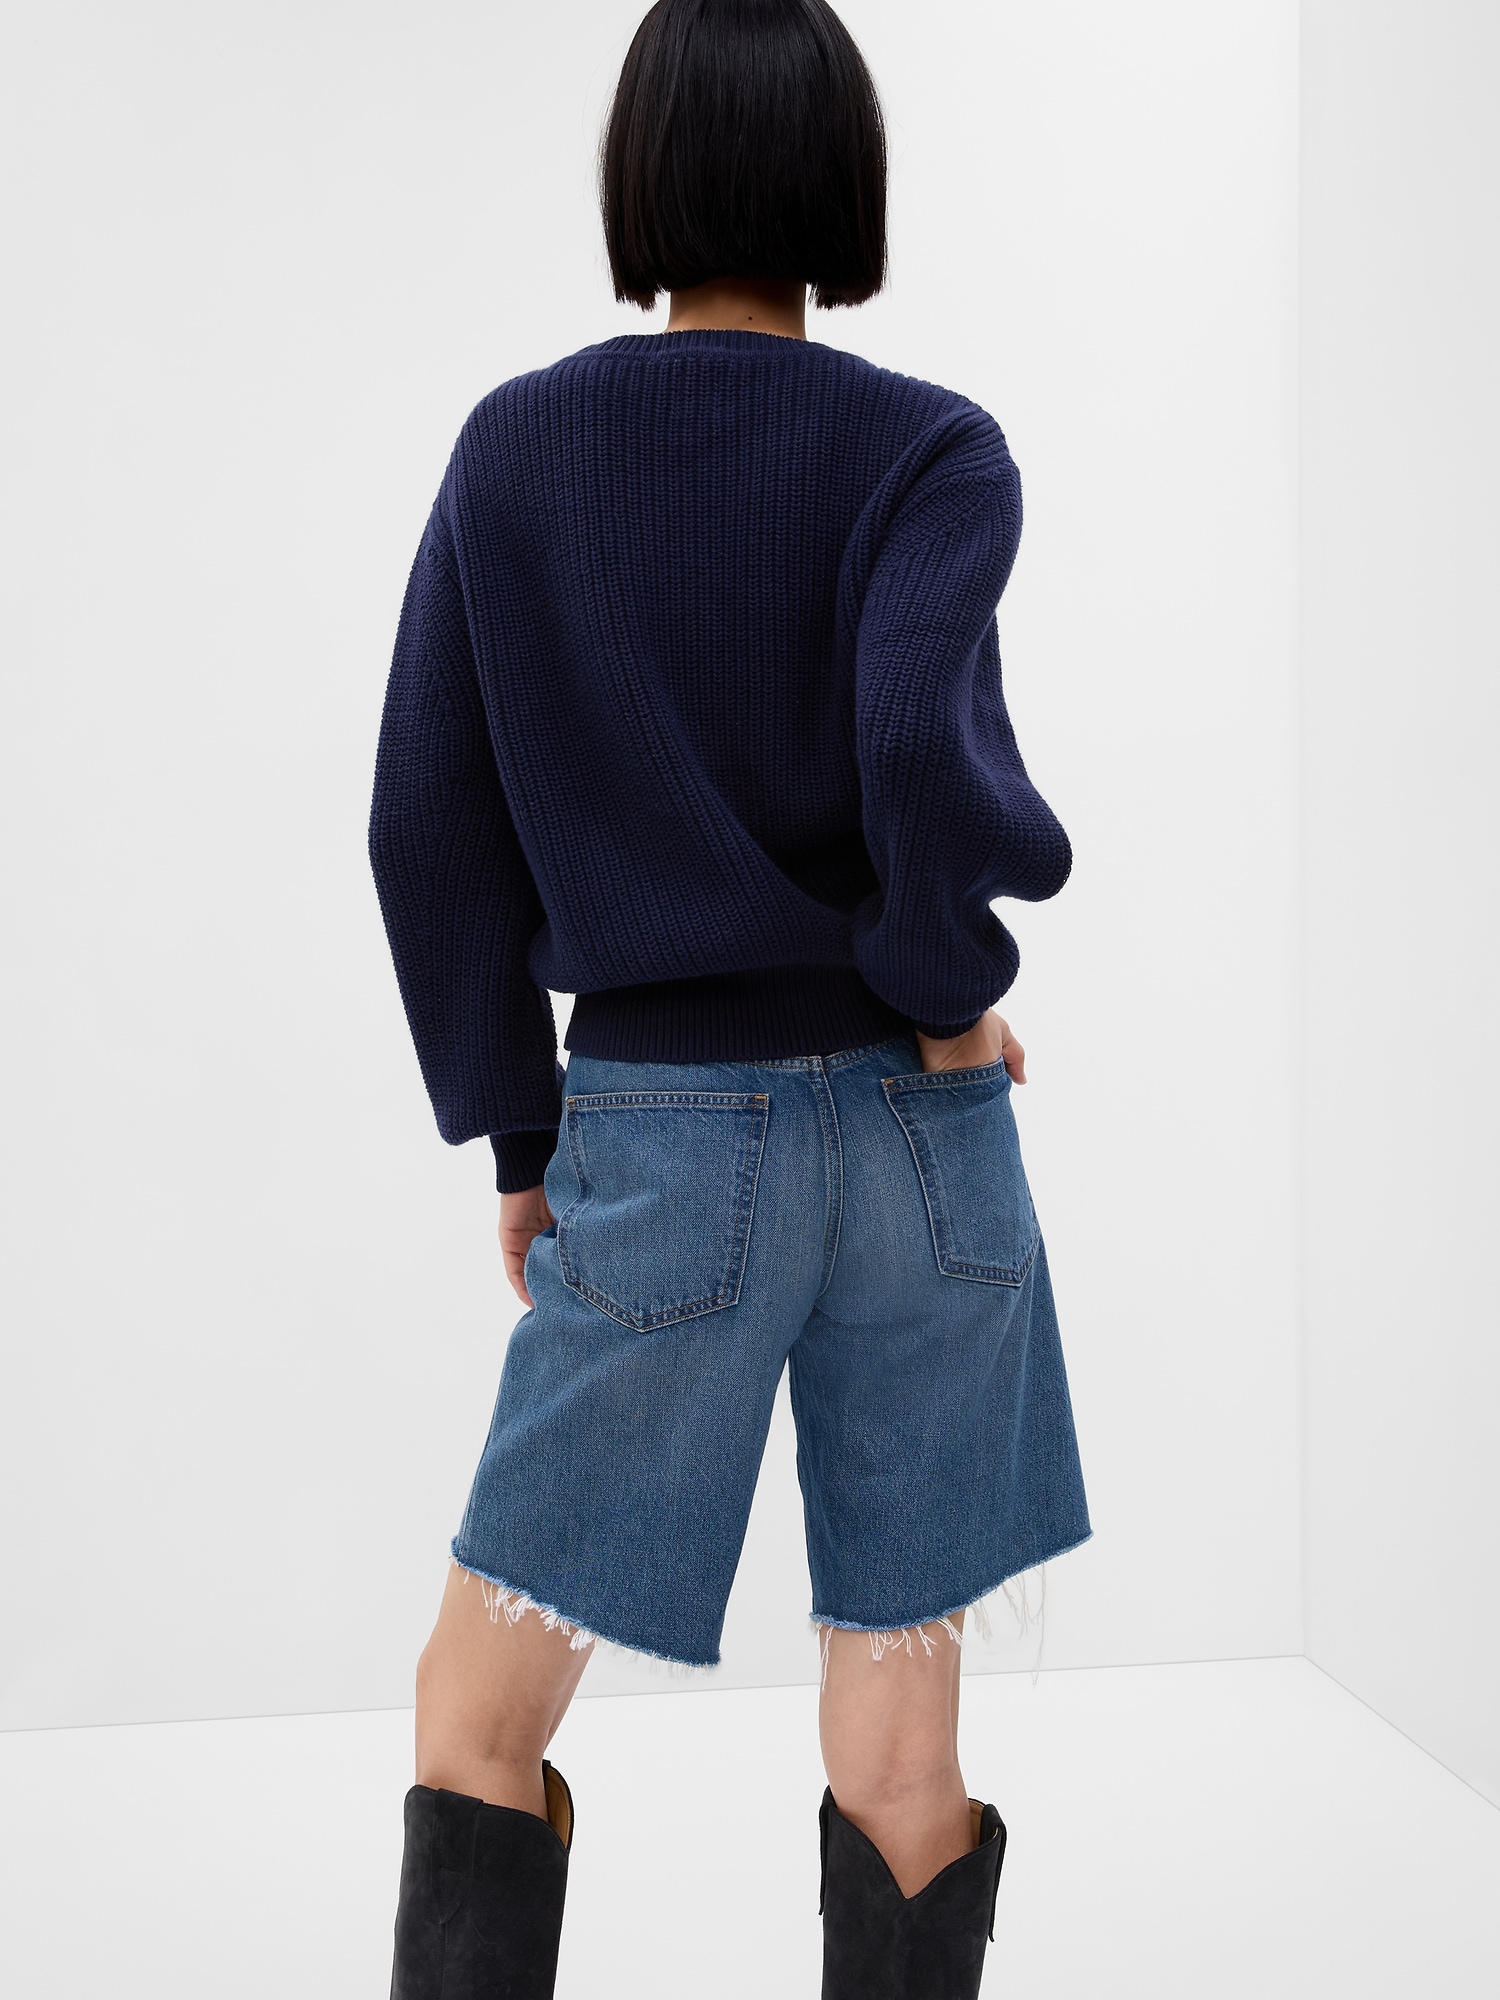 Shaker-Stitch Crewneck Sweater | Gap